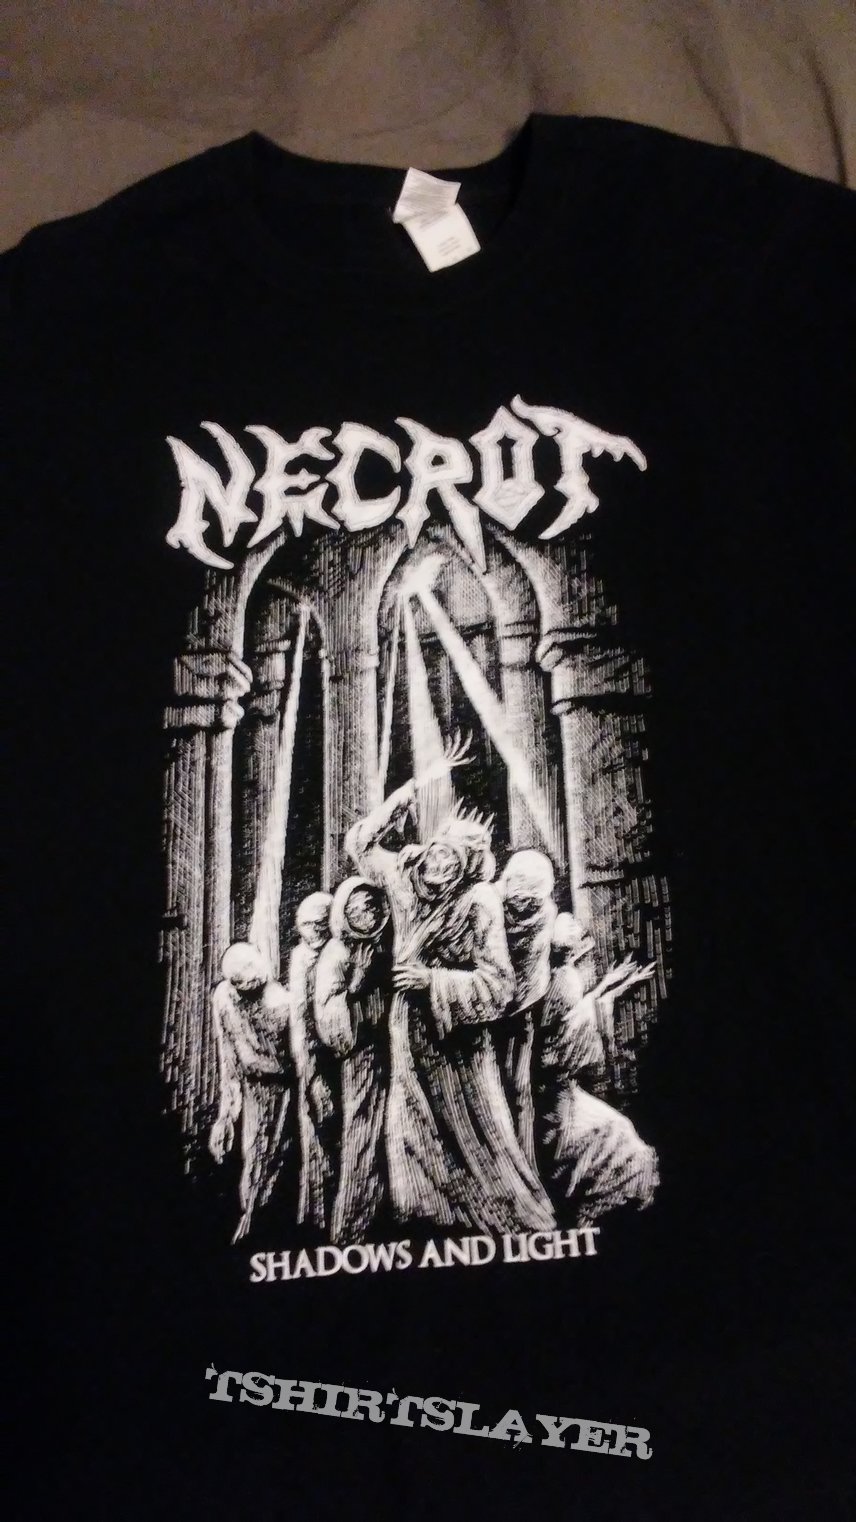 Necrot shirt